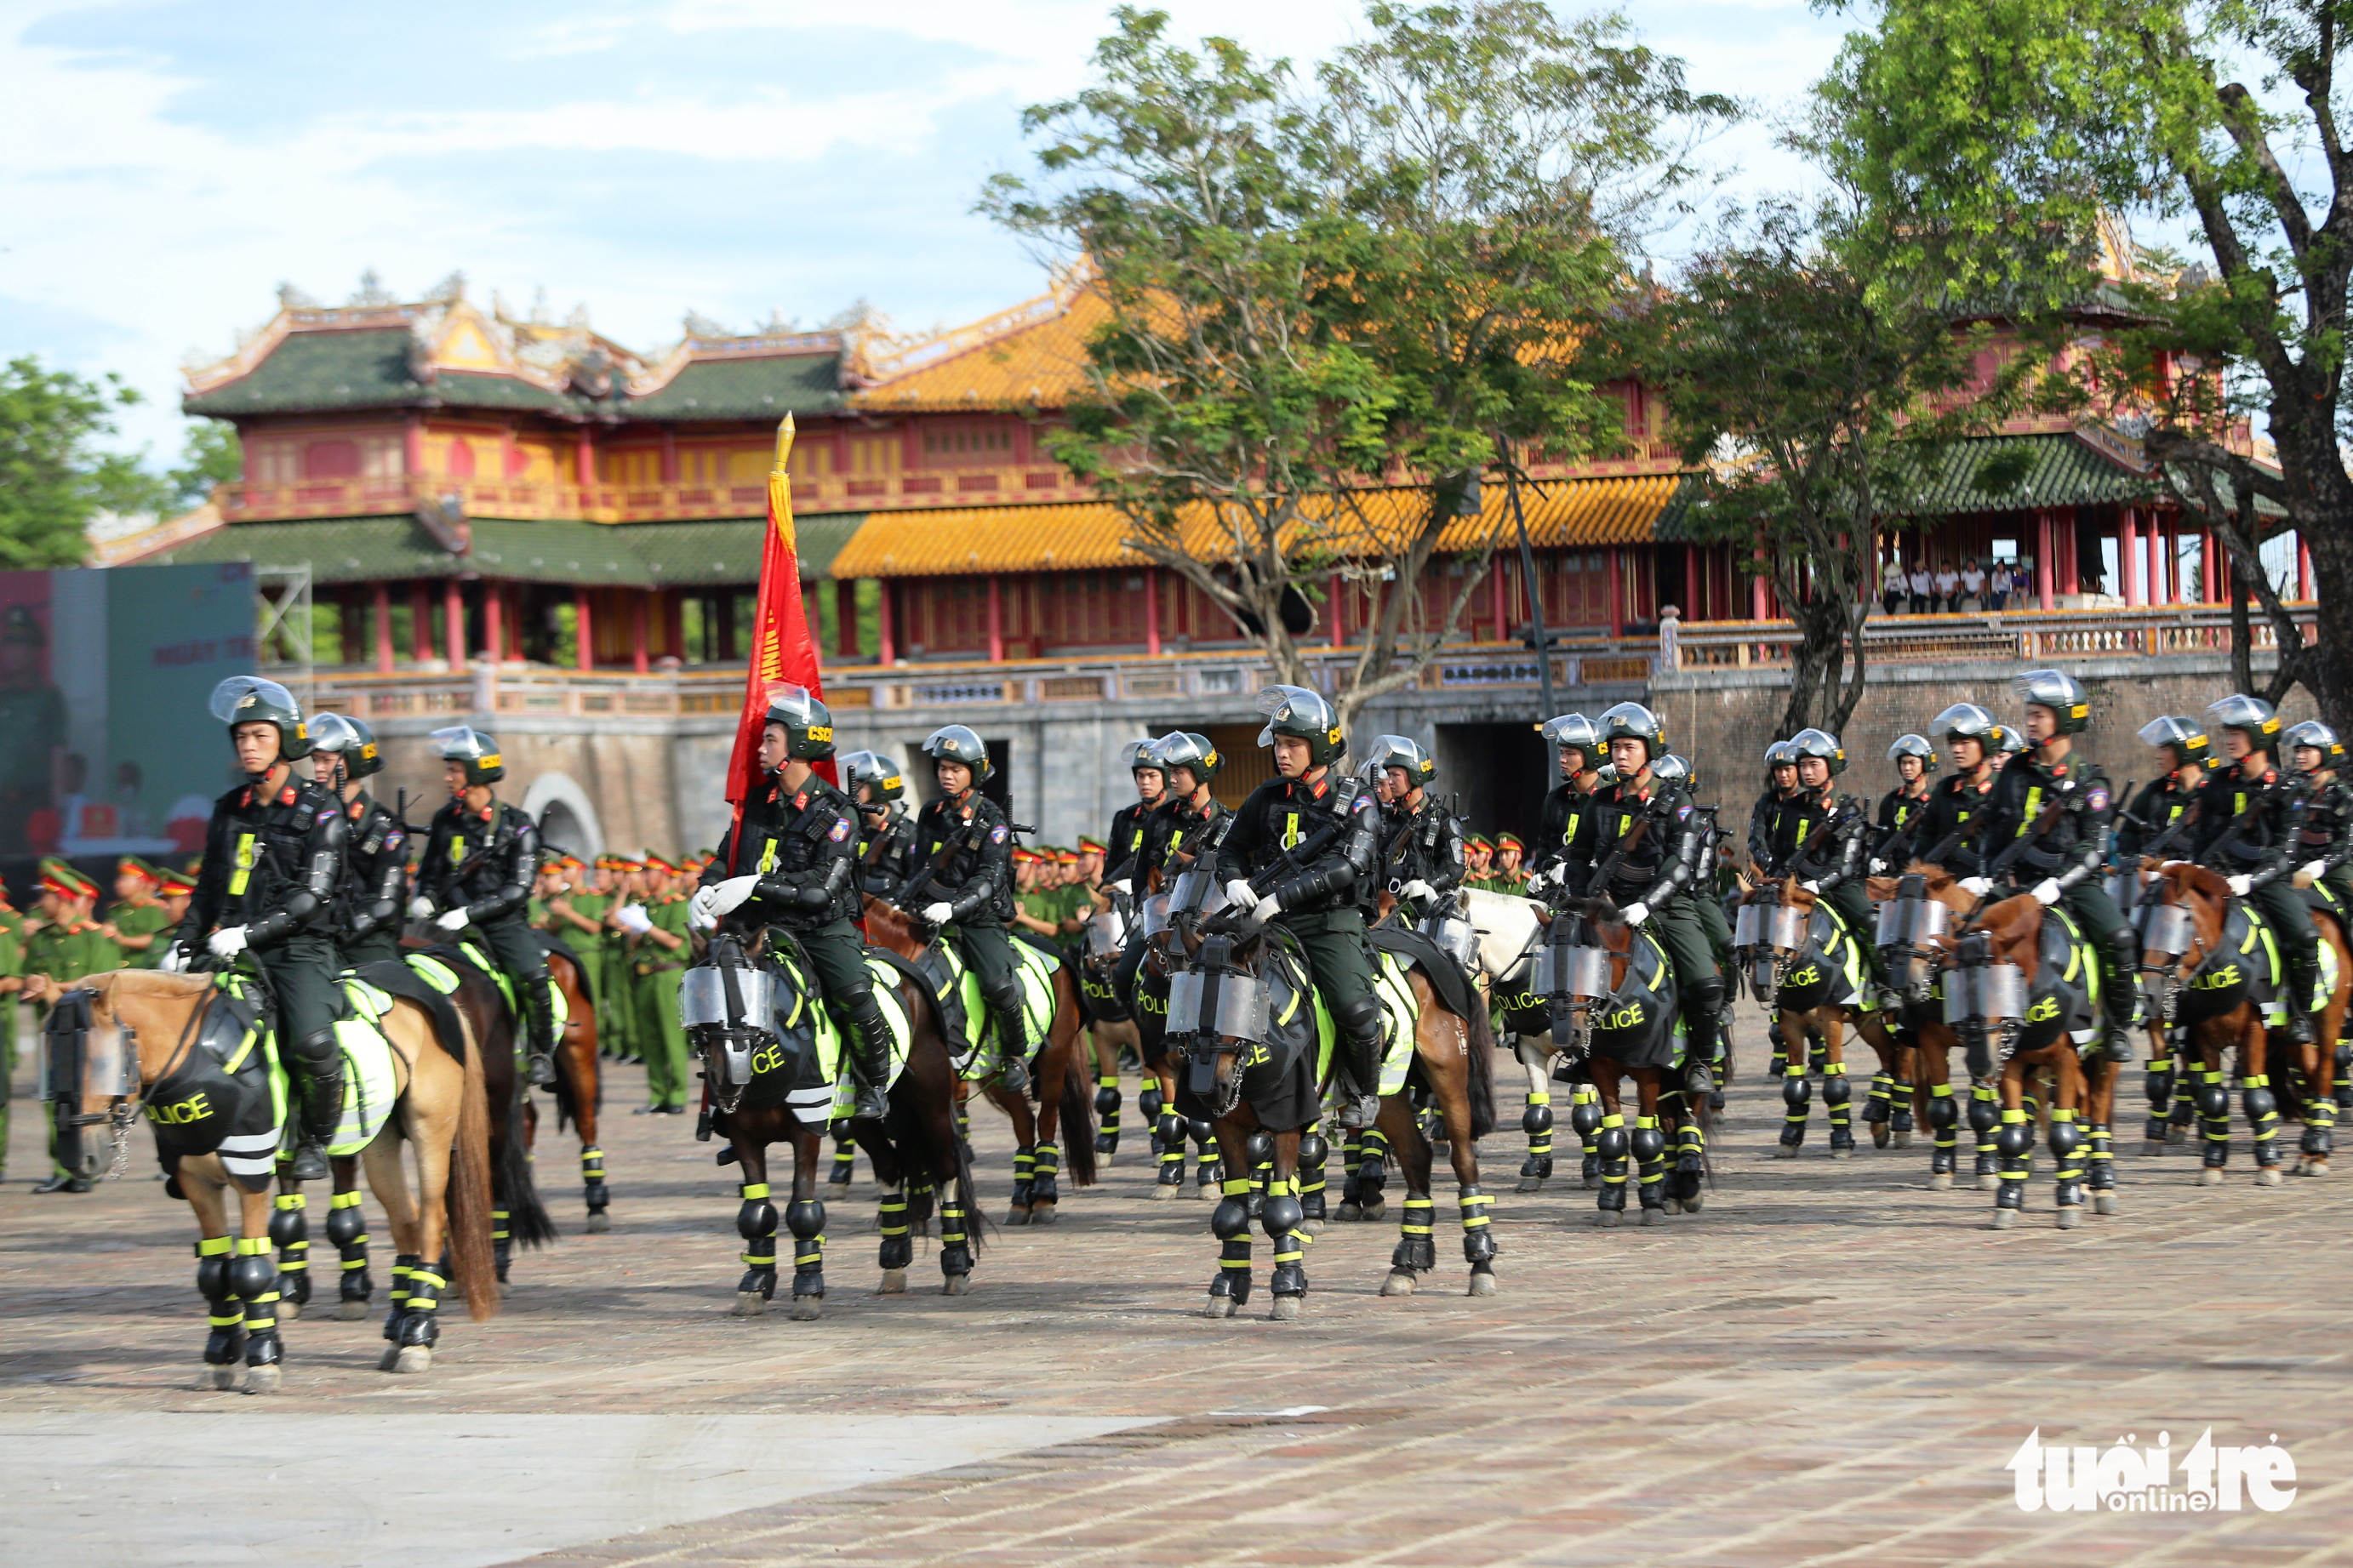 Police parade, martial arts, shooting performances take place in Vietnam’s Hue Citadel